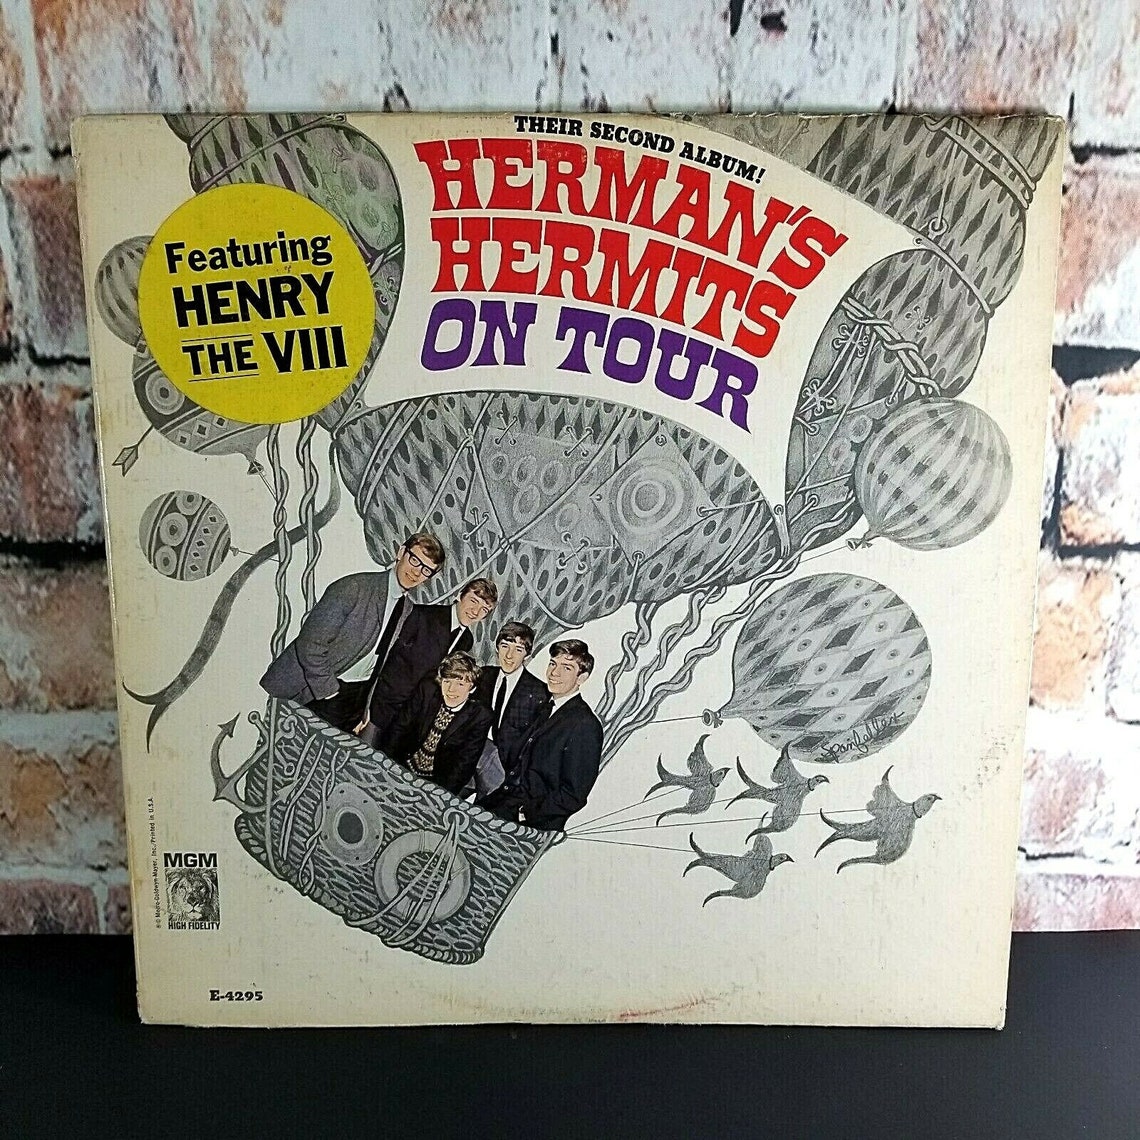 herman's hermits herman's hermits on tour